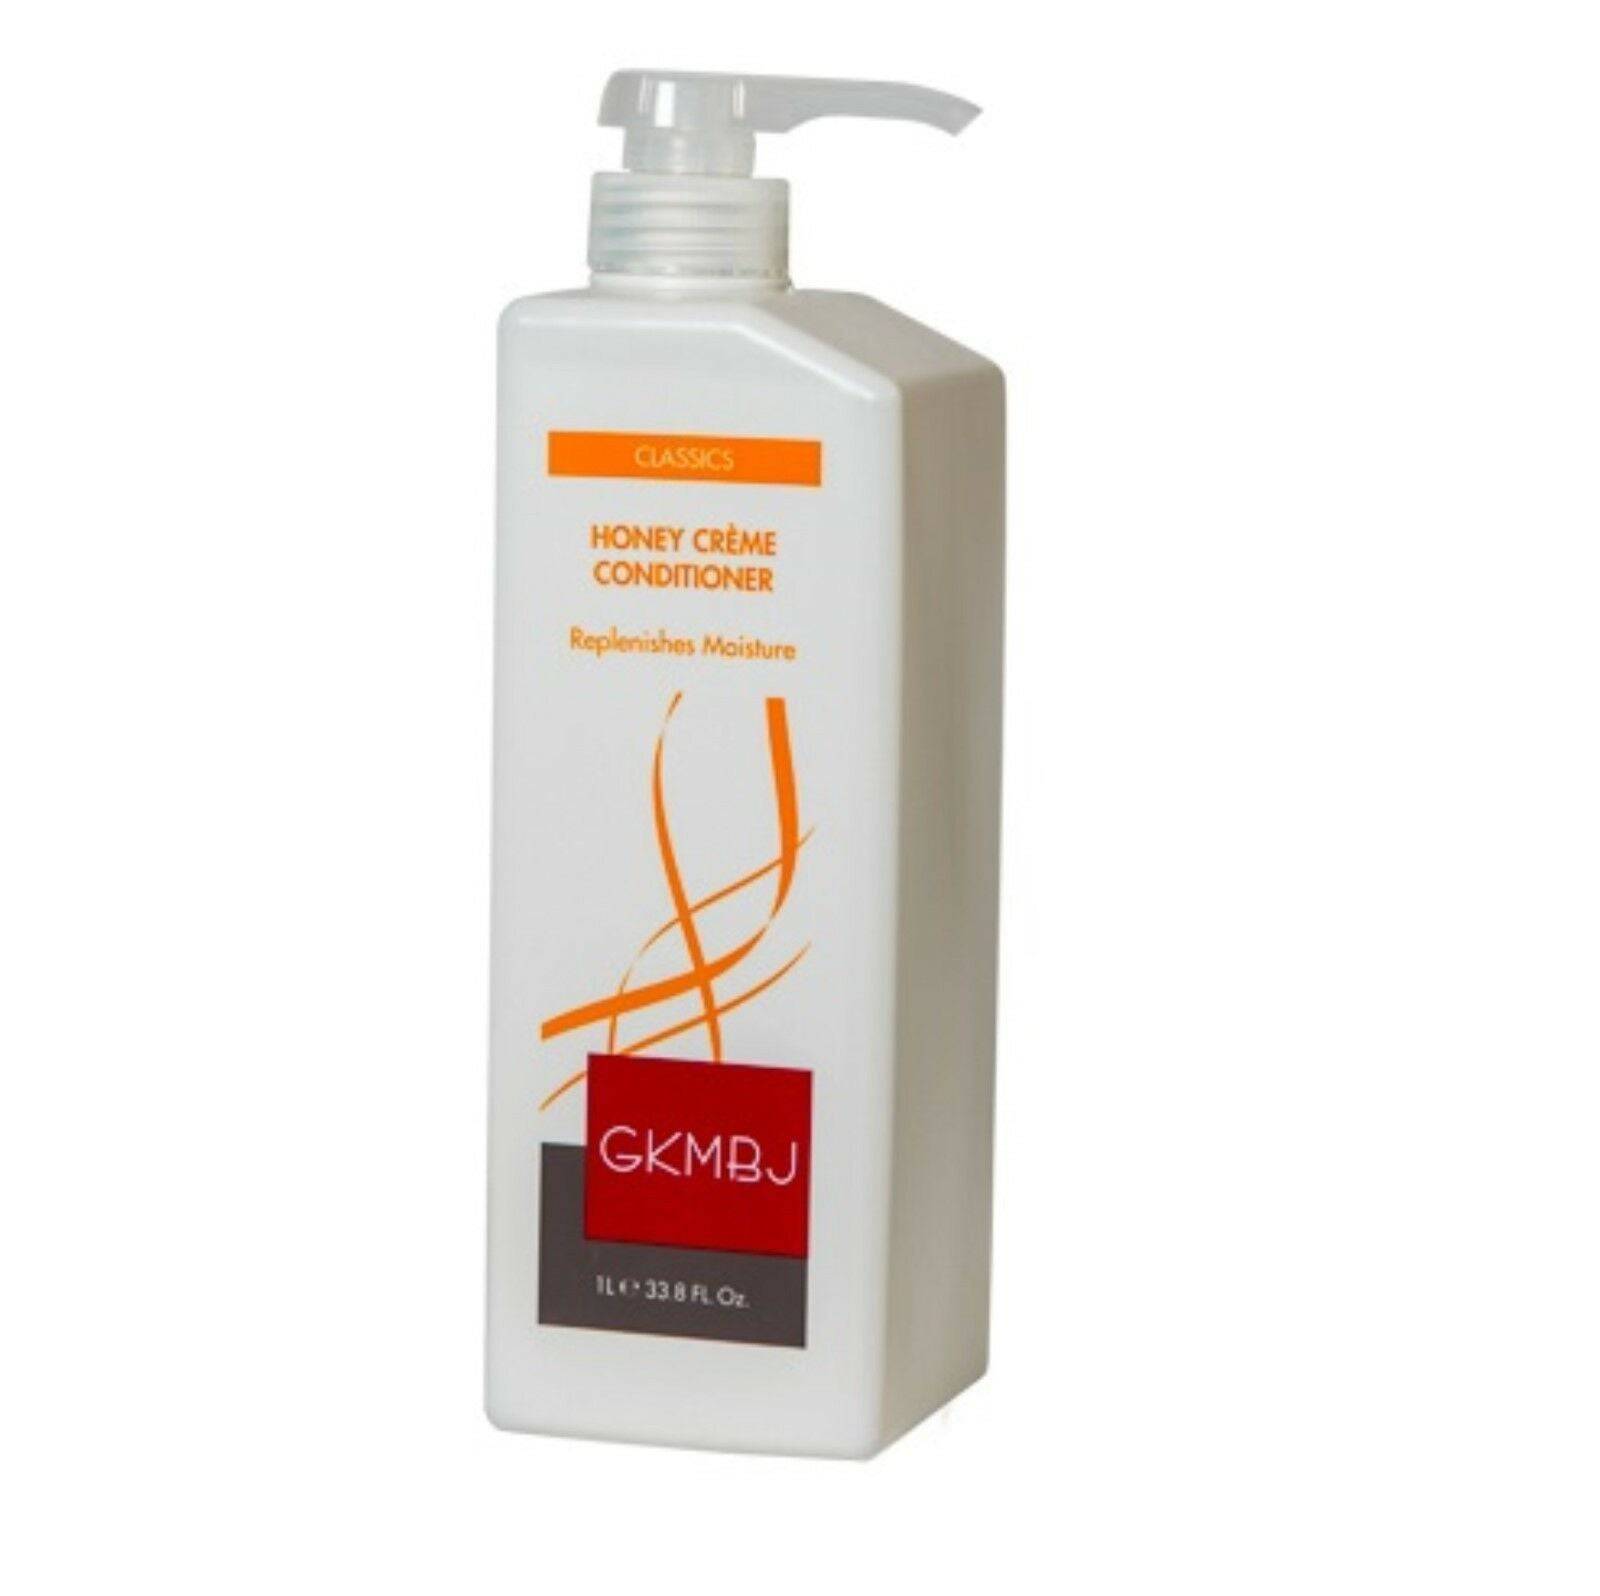 GKMBJ Hydrating Shampoo & Honey Creme Conditioner 1lt each Replenishes  Moisture - On Line Hair Depot